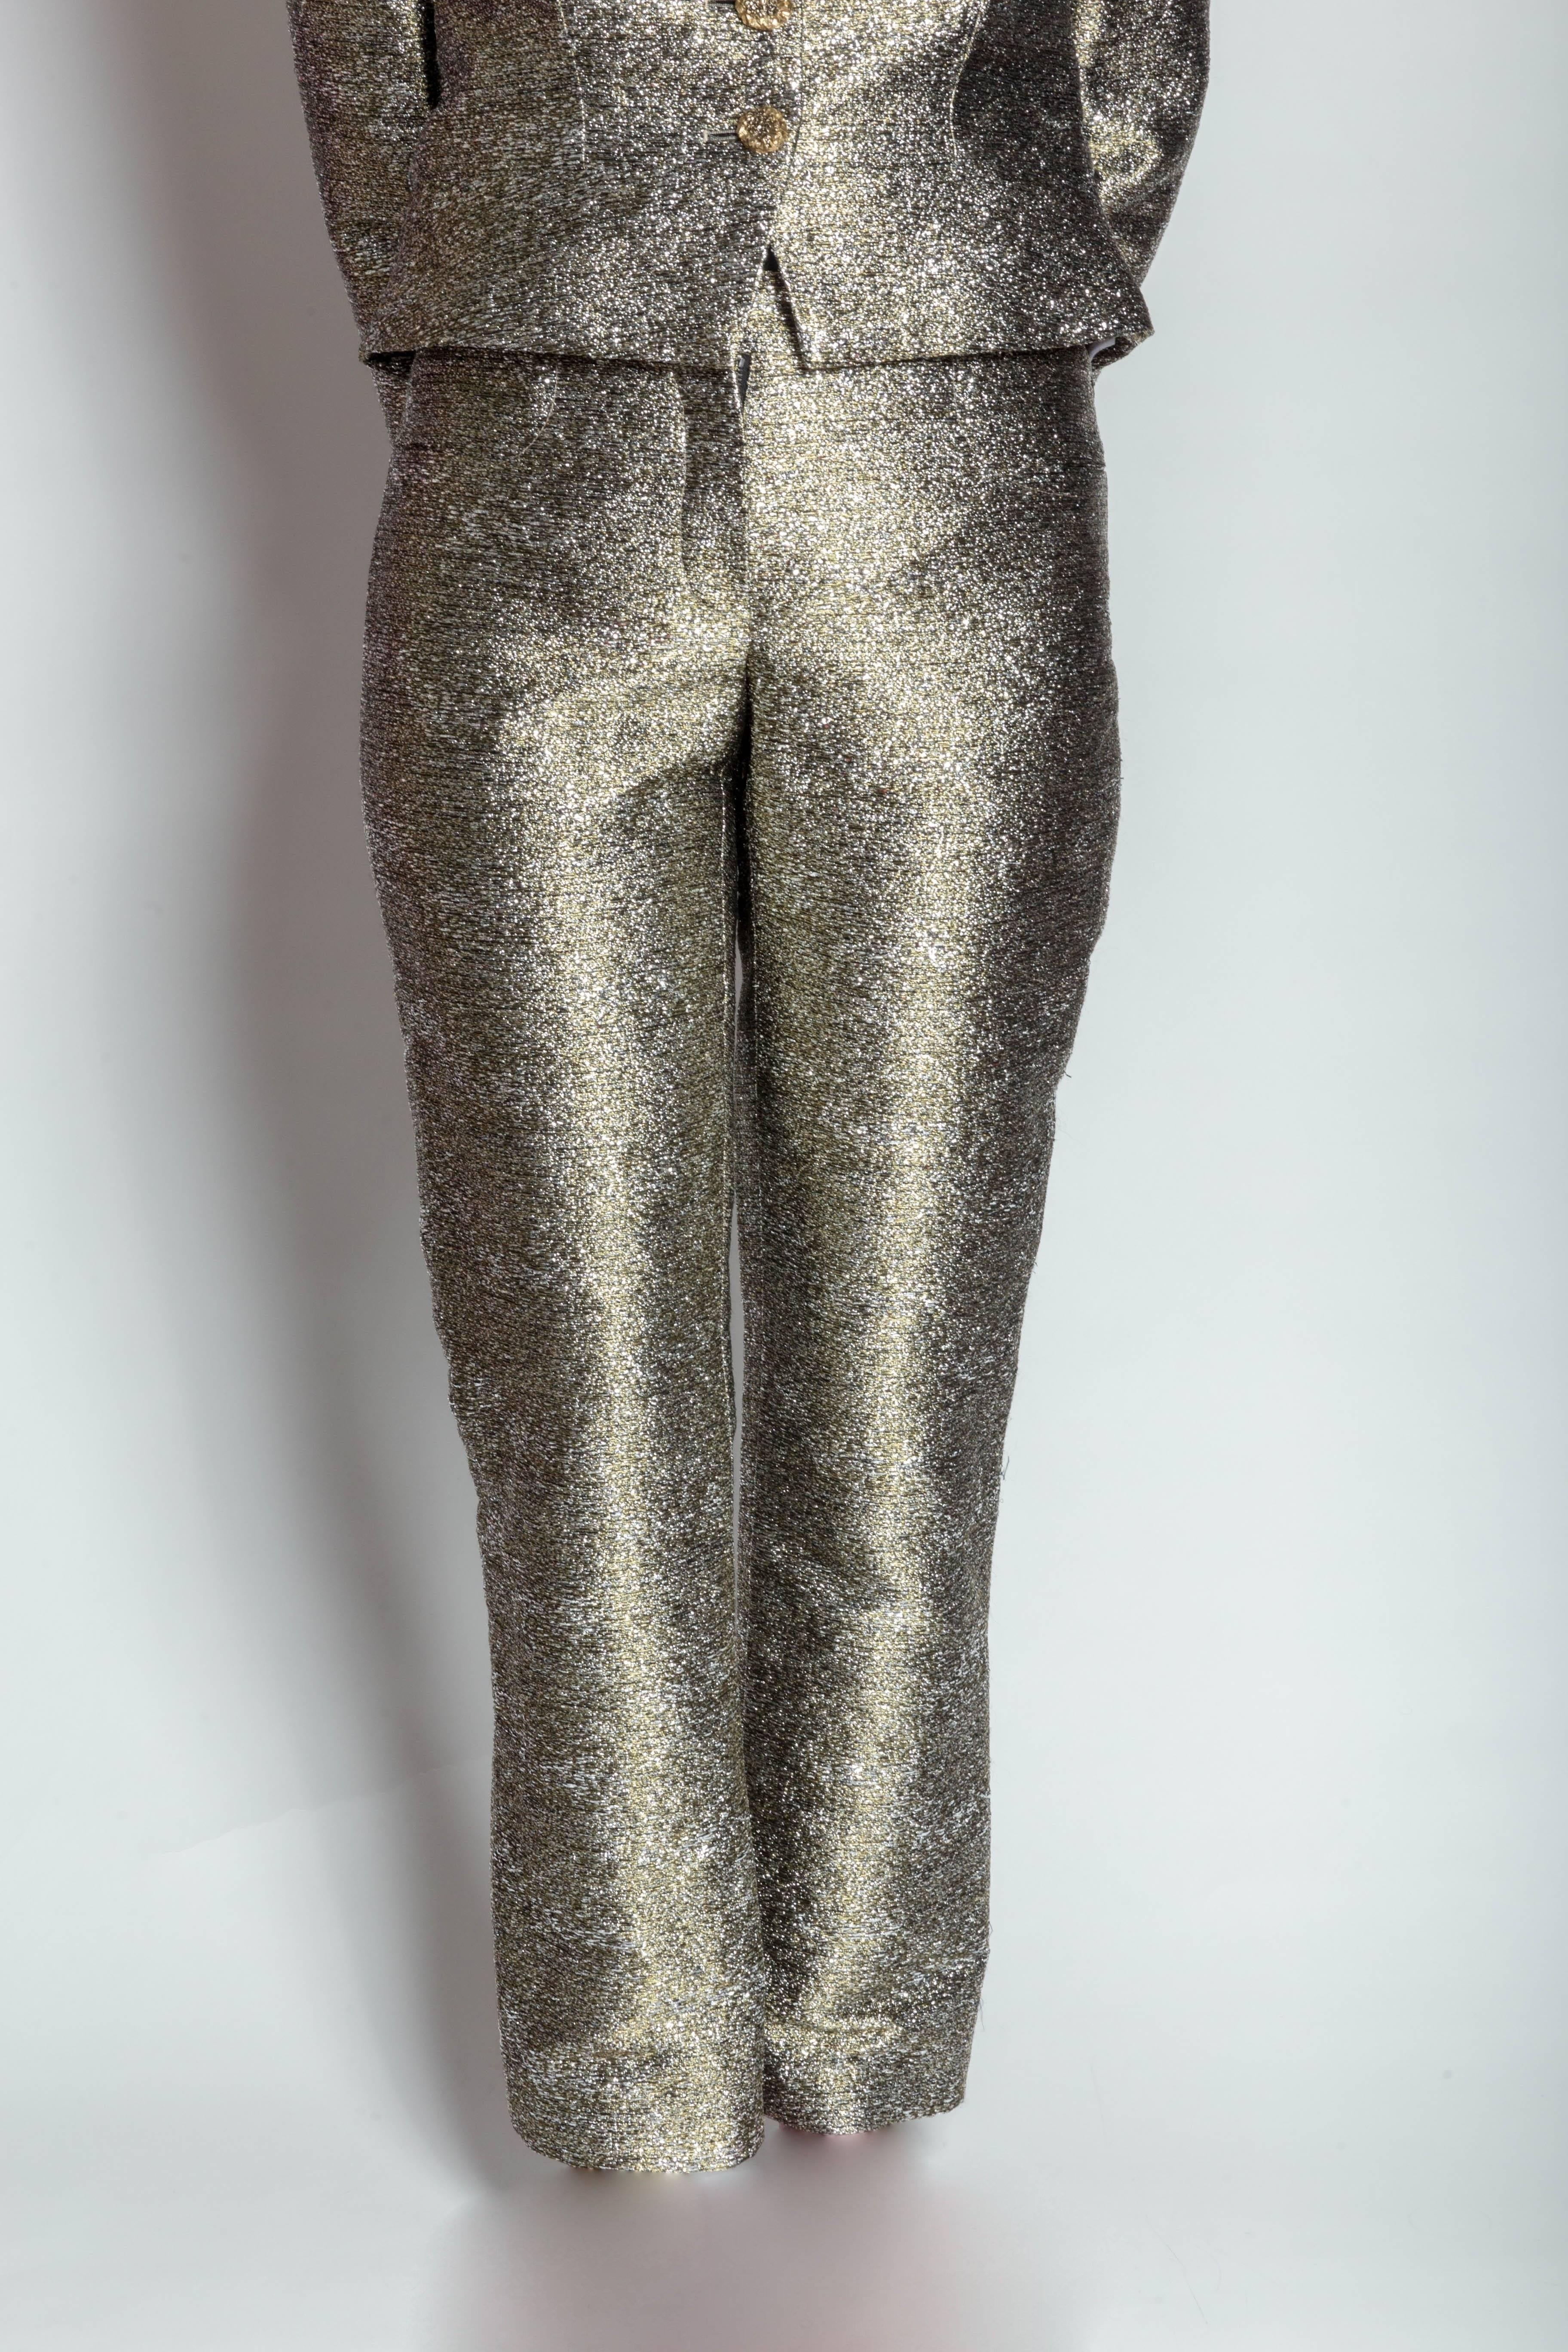 Chanel Silver Metallic Jacket and Pants Suit / Size 40 Jacket / Size 38 Pants 6